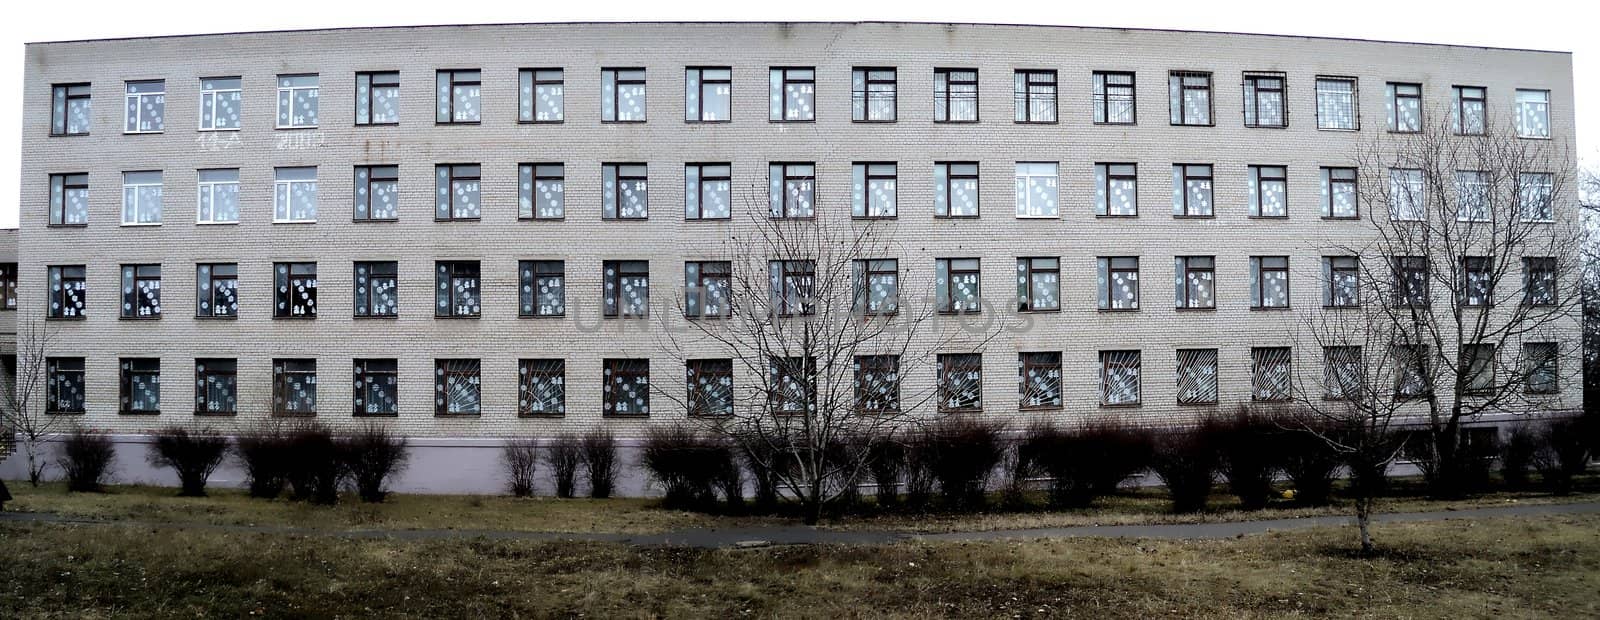 The school building by Krakatuk